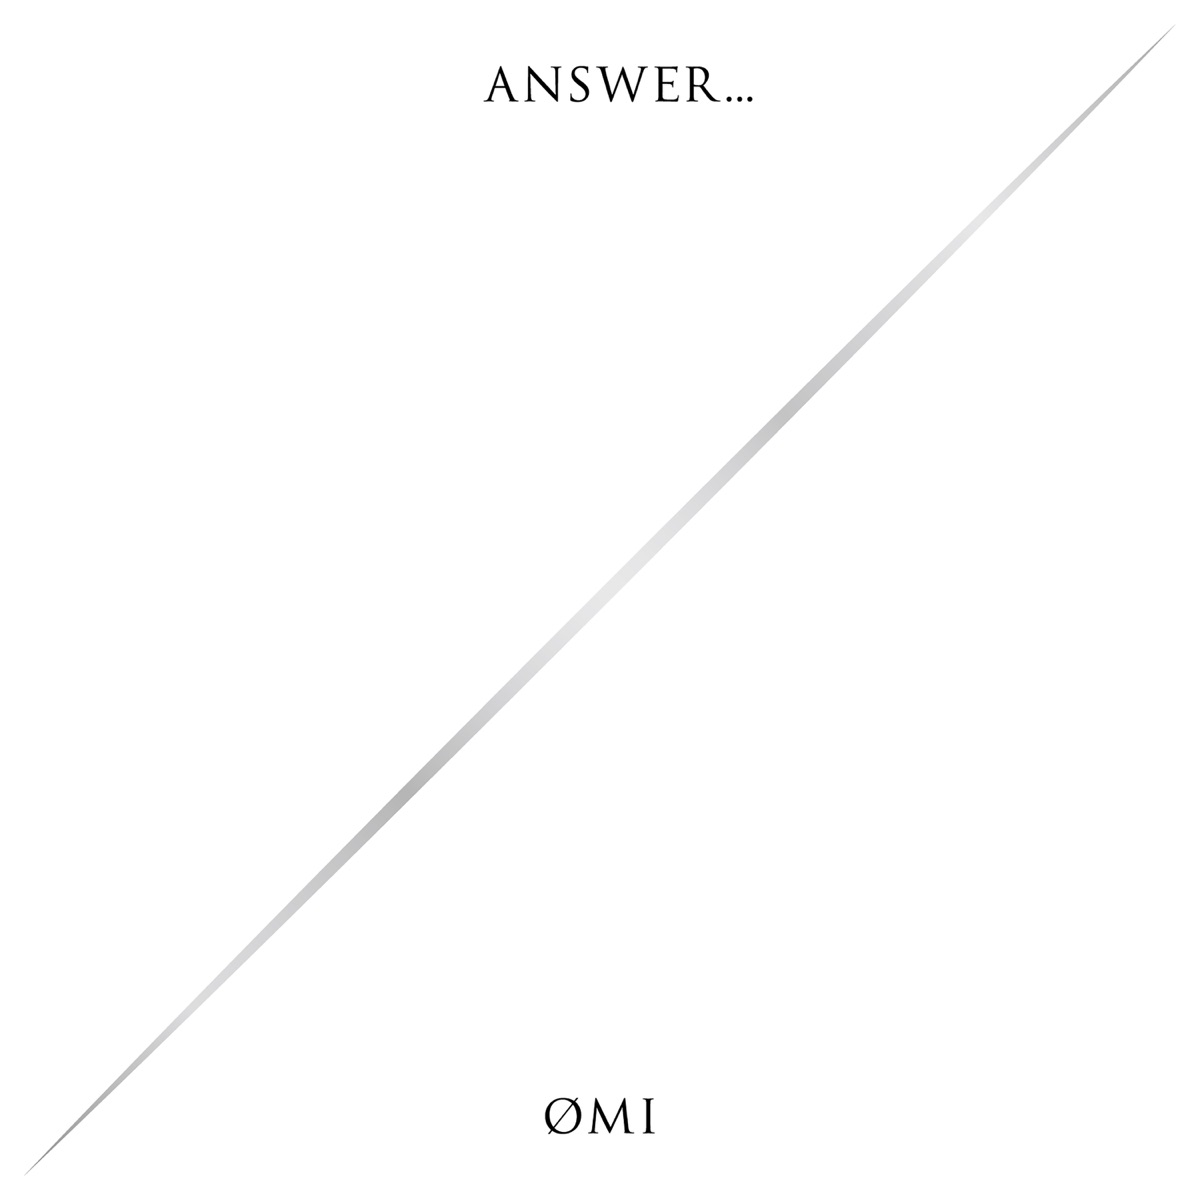 『ØMI - Give up』収録の『ANSWER... SHADOW』ジャケット